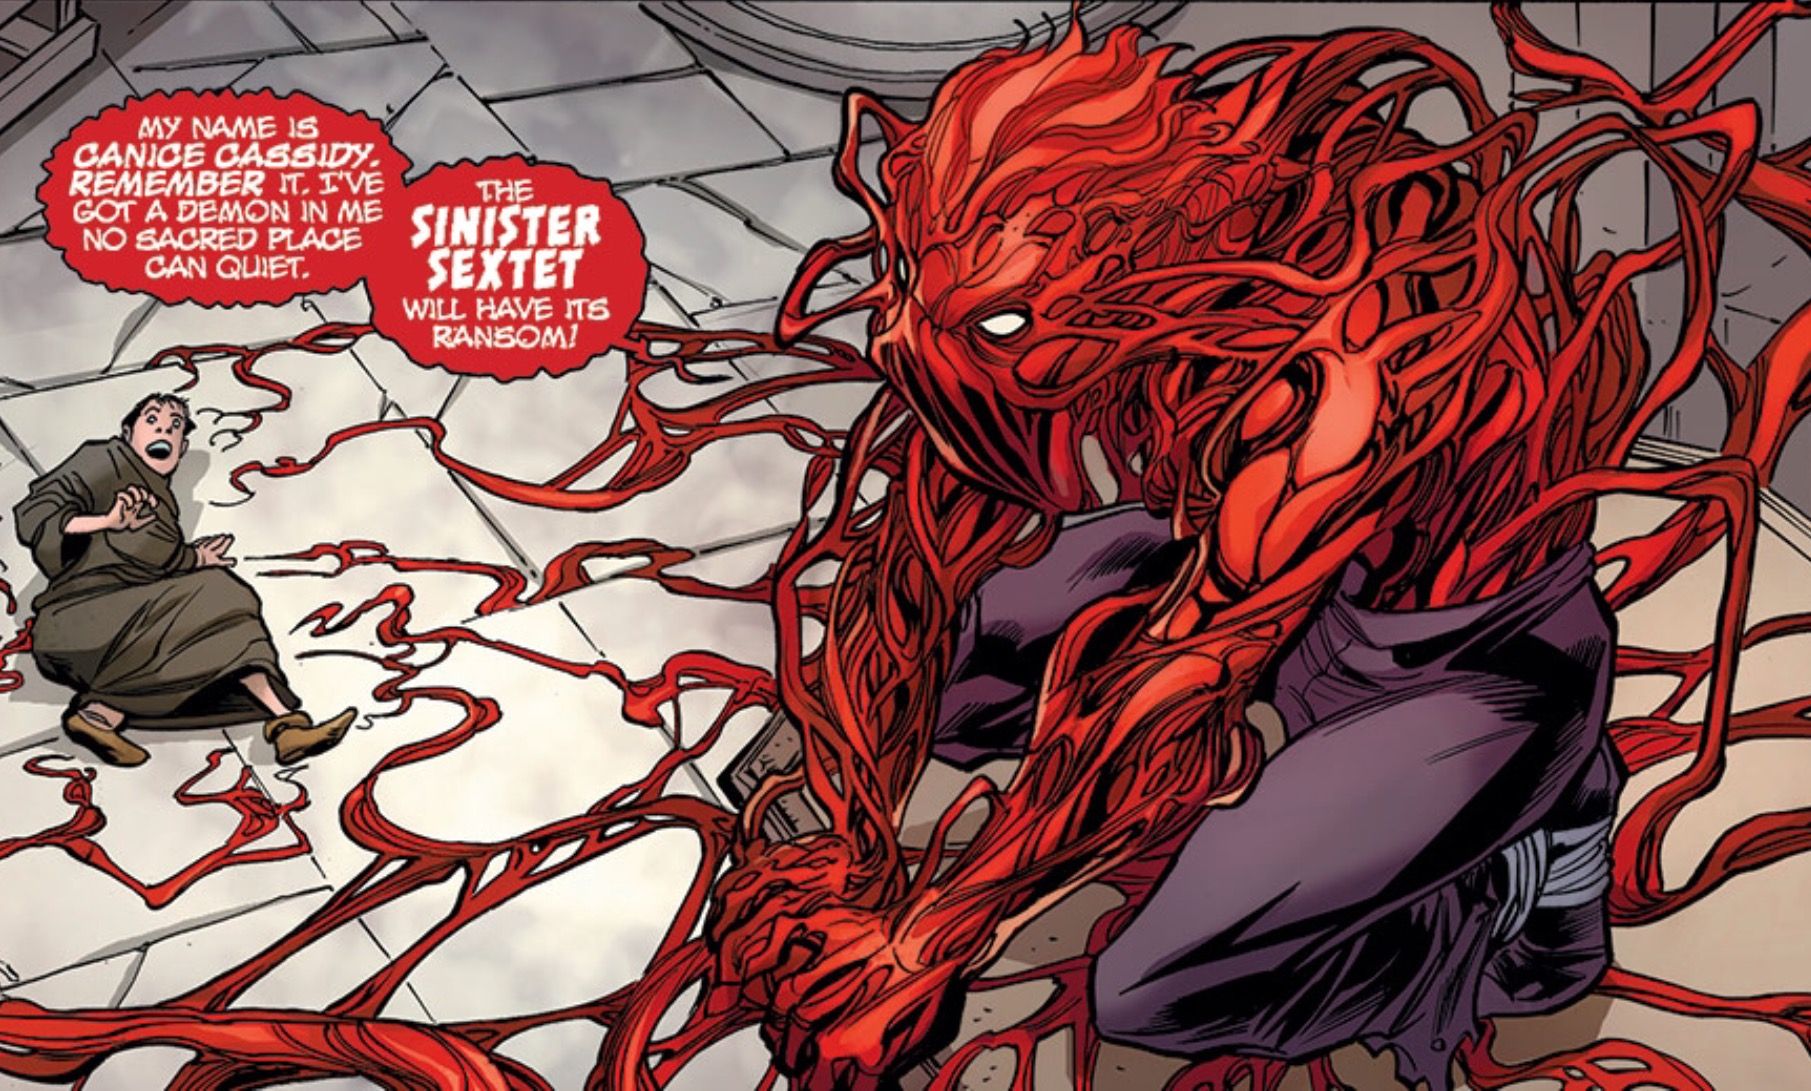 Canice Cassidy as Carnage Marvel 1602 Amazing Spider-Man v4-1